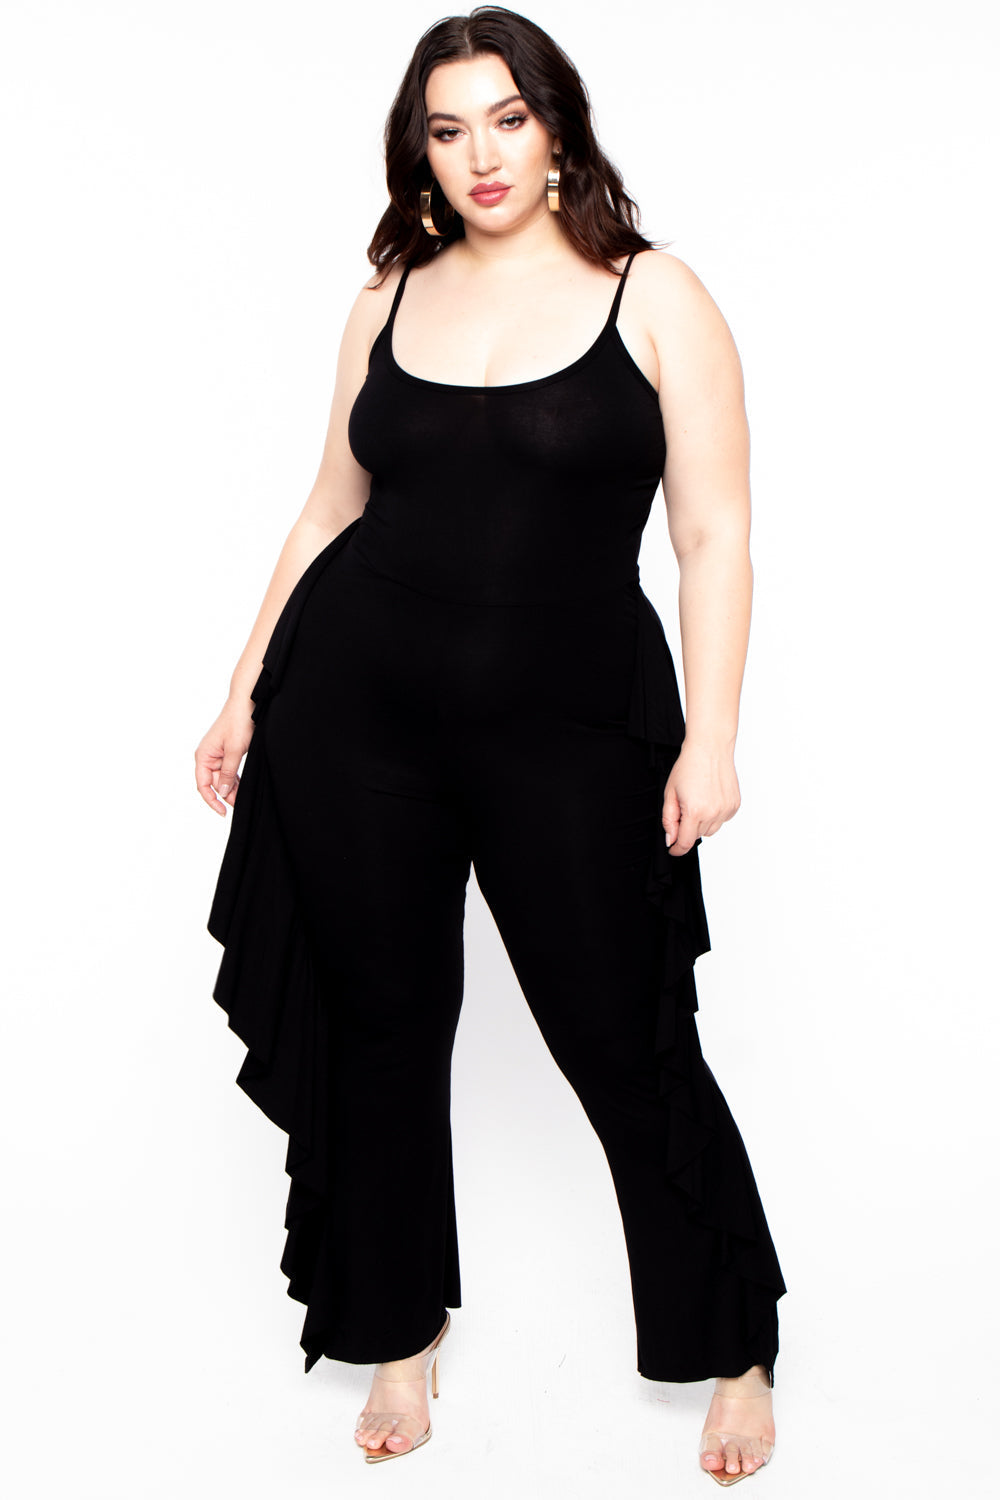 Plus Size Andrea Ruffled Jumpsuit - Black - Curvy Sense